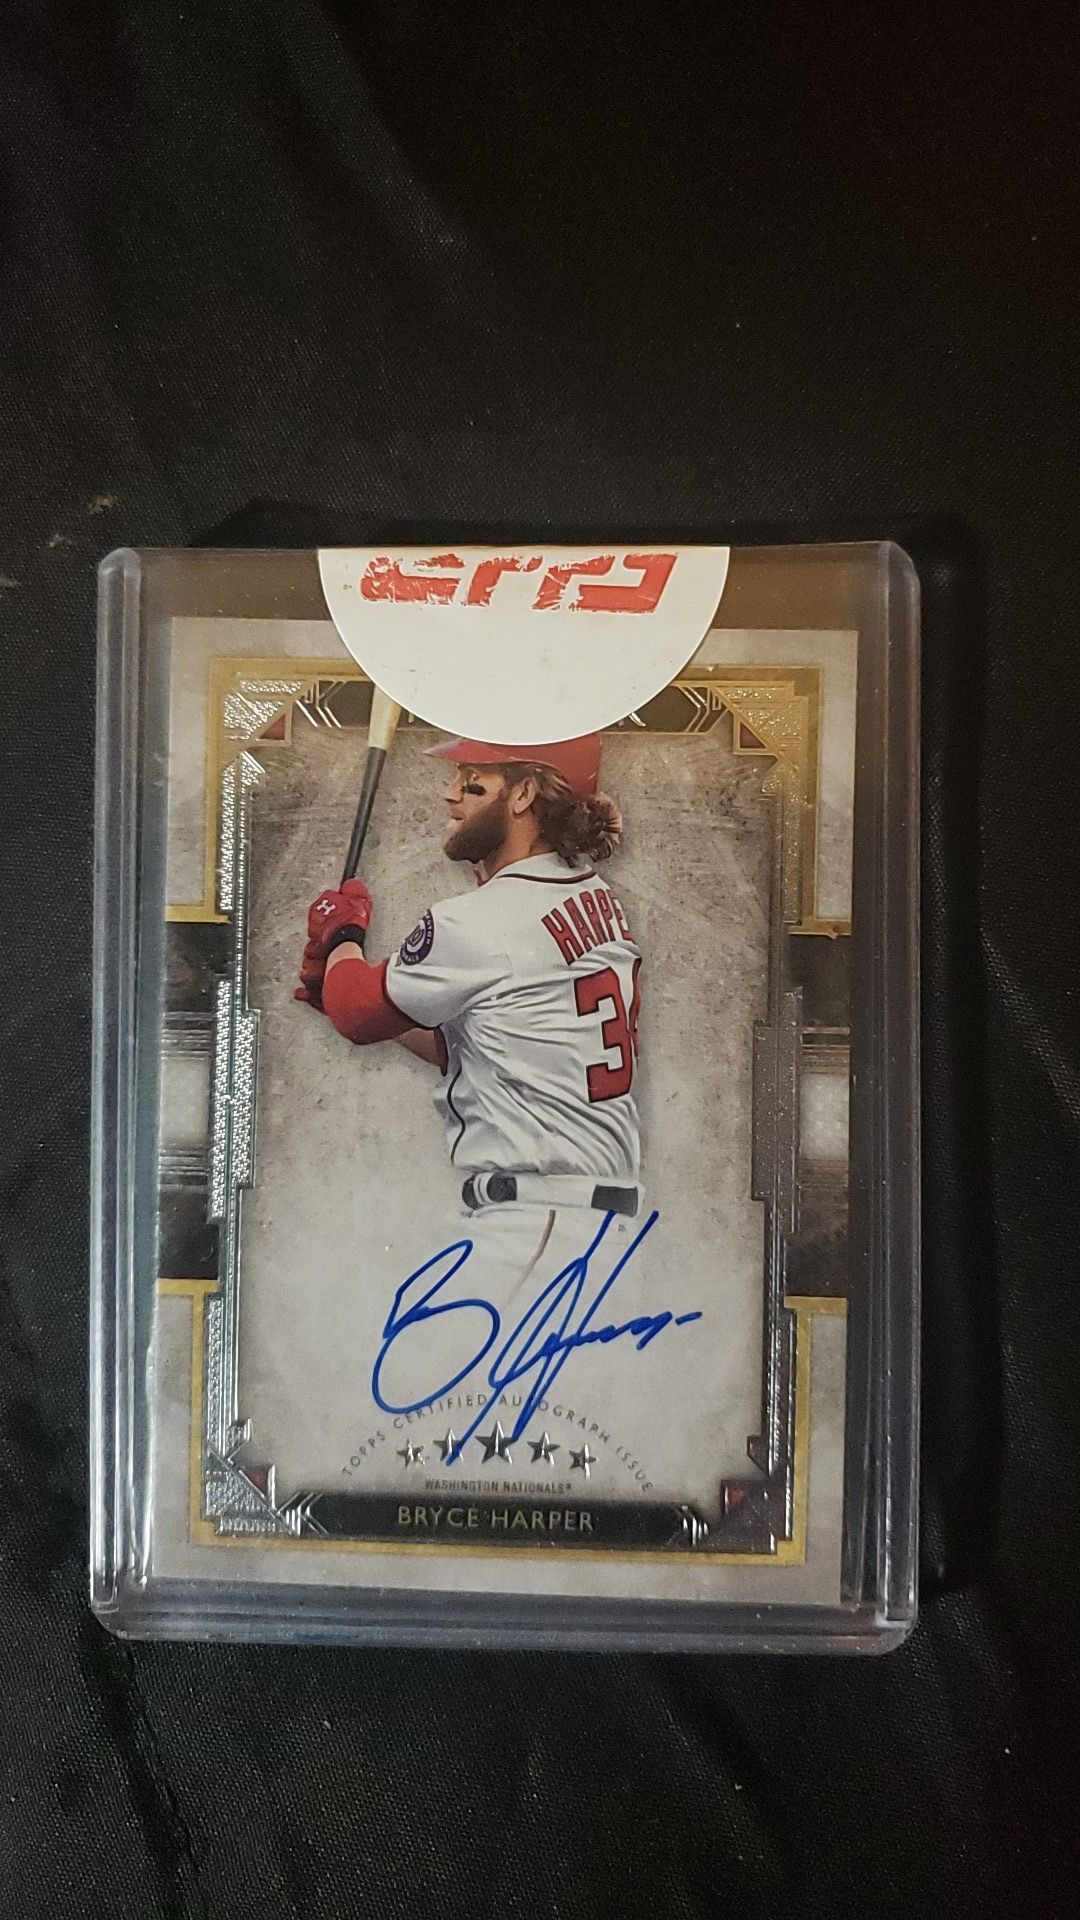 Bryce hopper autographed baseball card